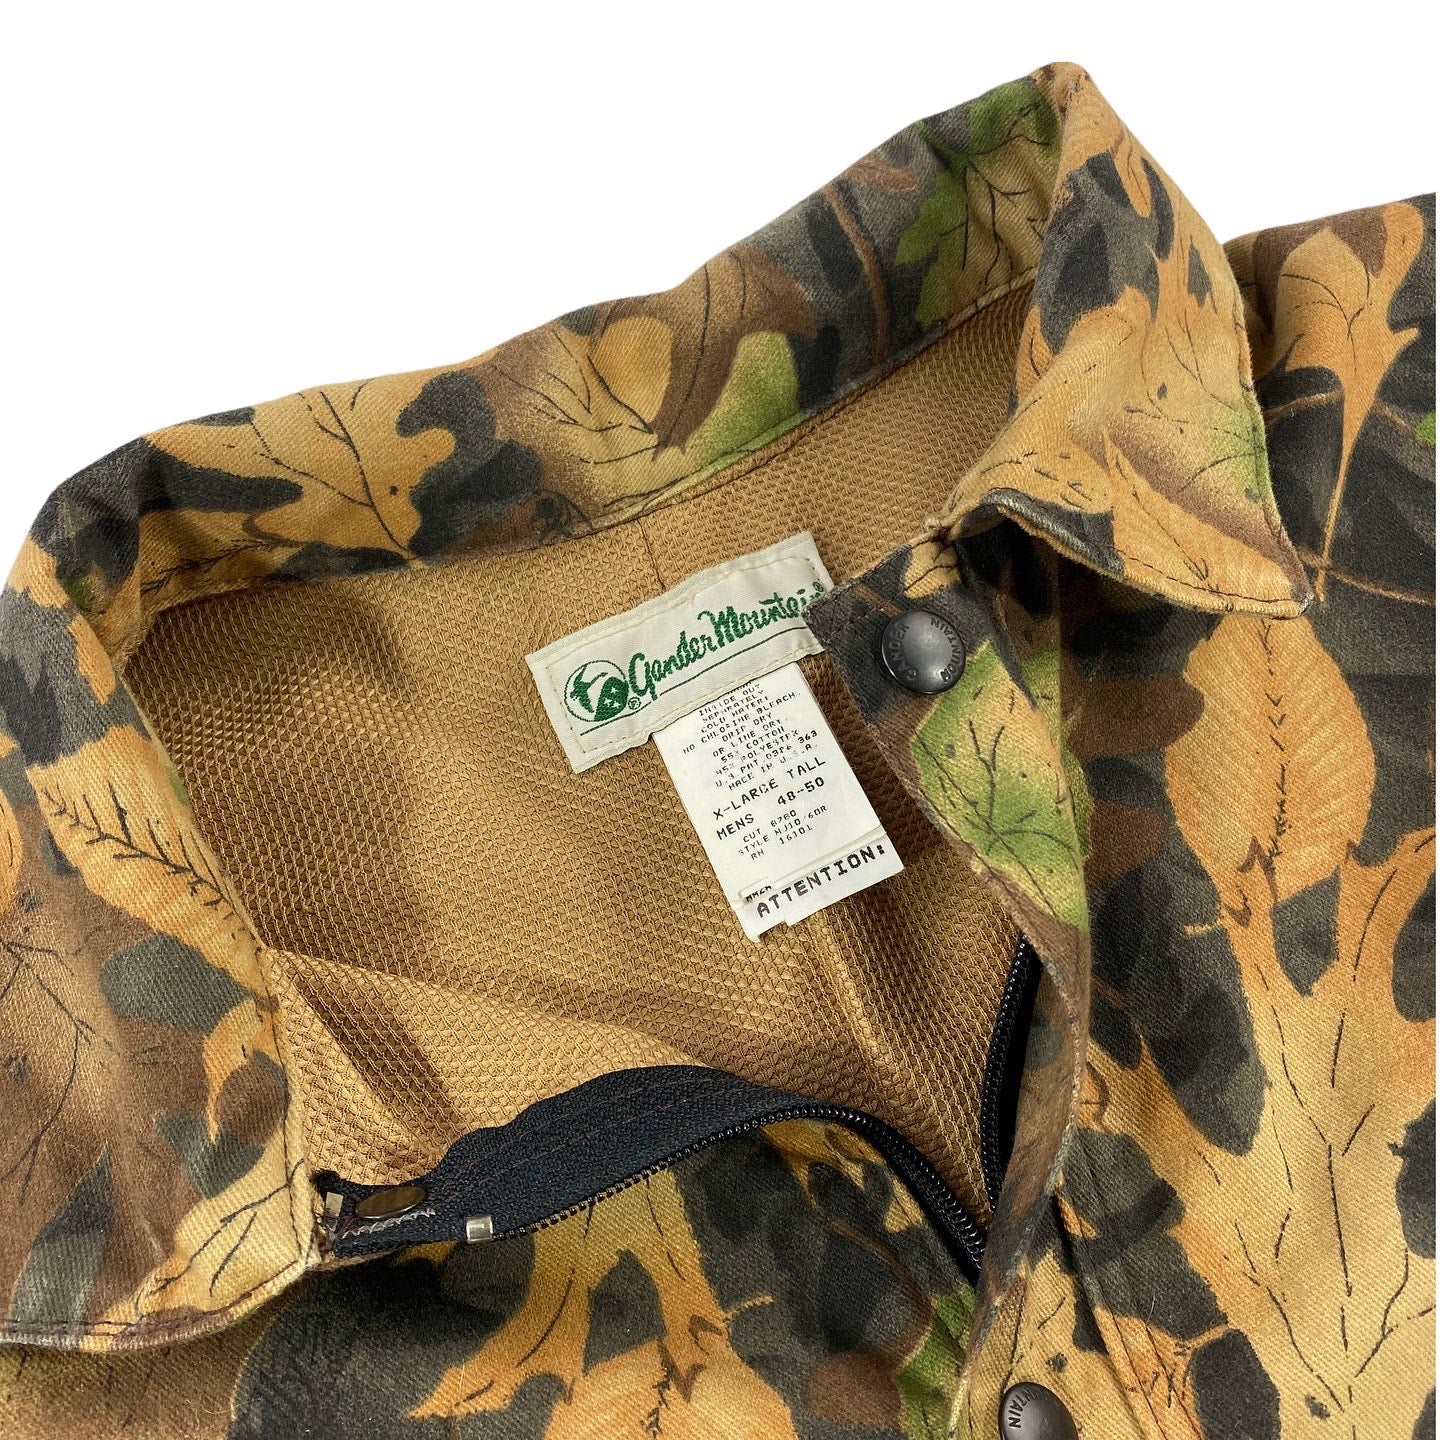 Leaf camo jacket. Made in usa🇺🇸 XL